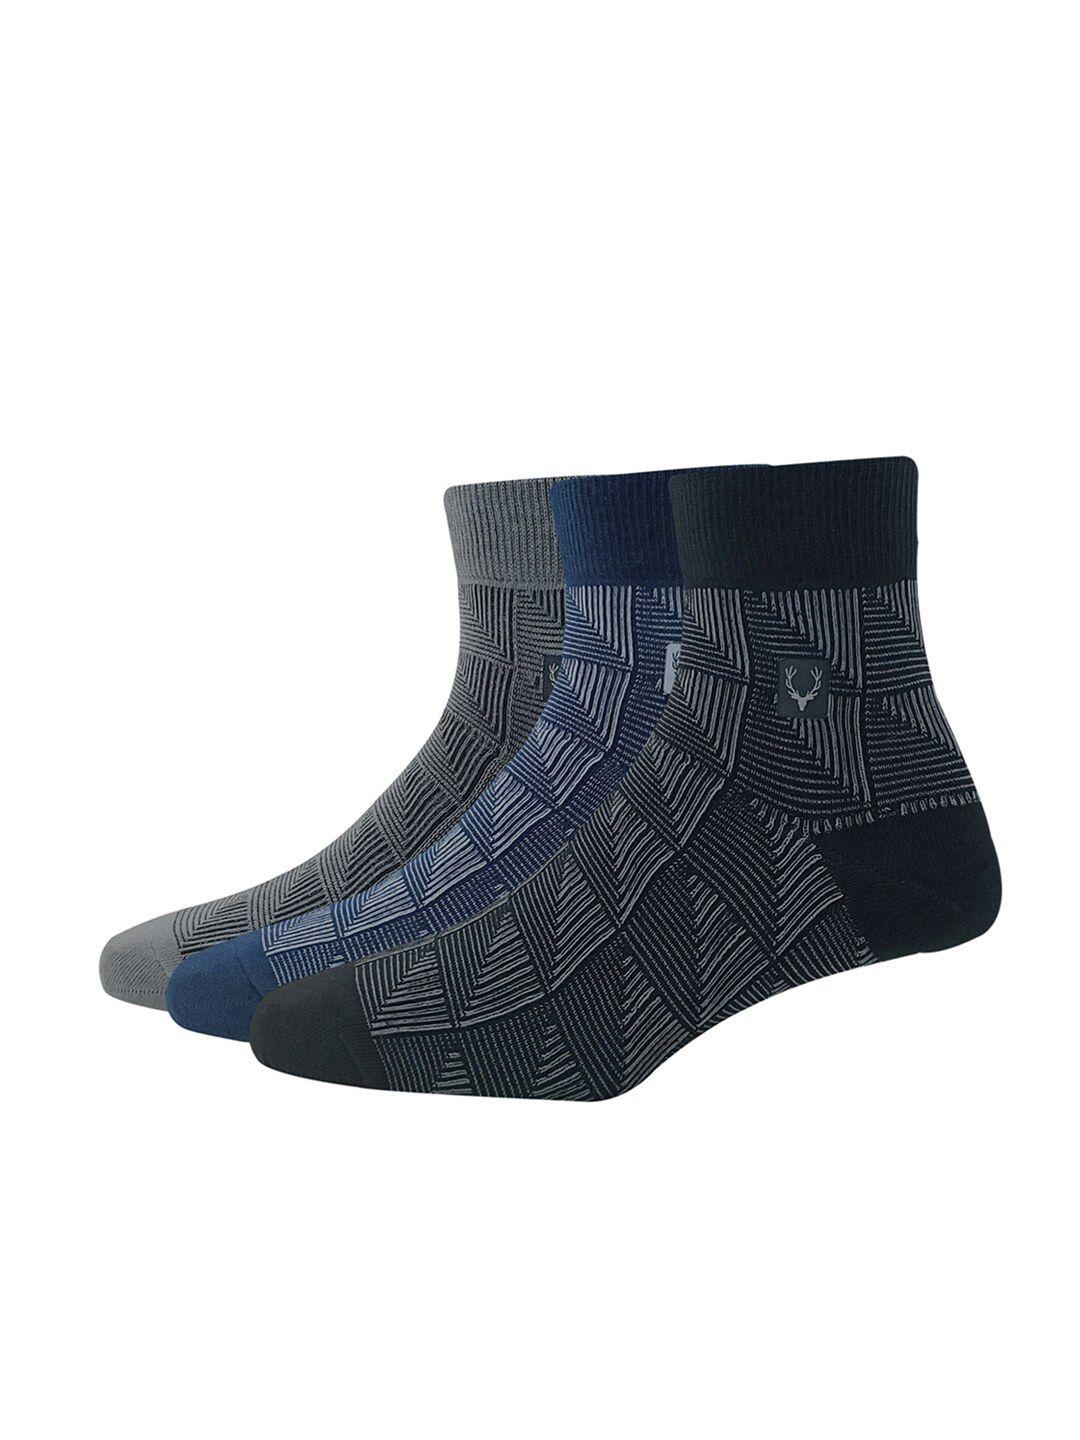 allen solly men pack of 3 patterned above ankle length socks